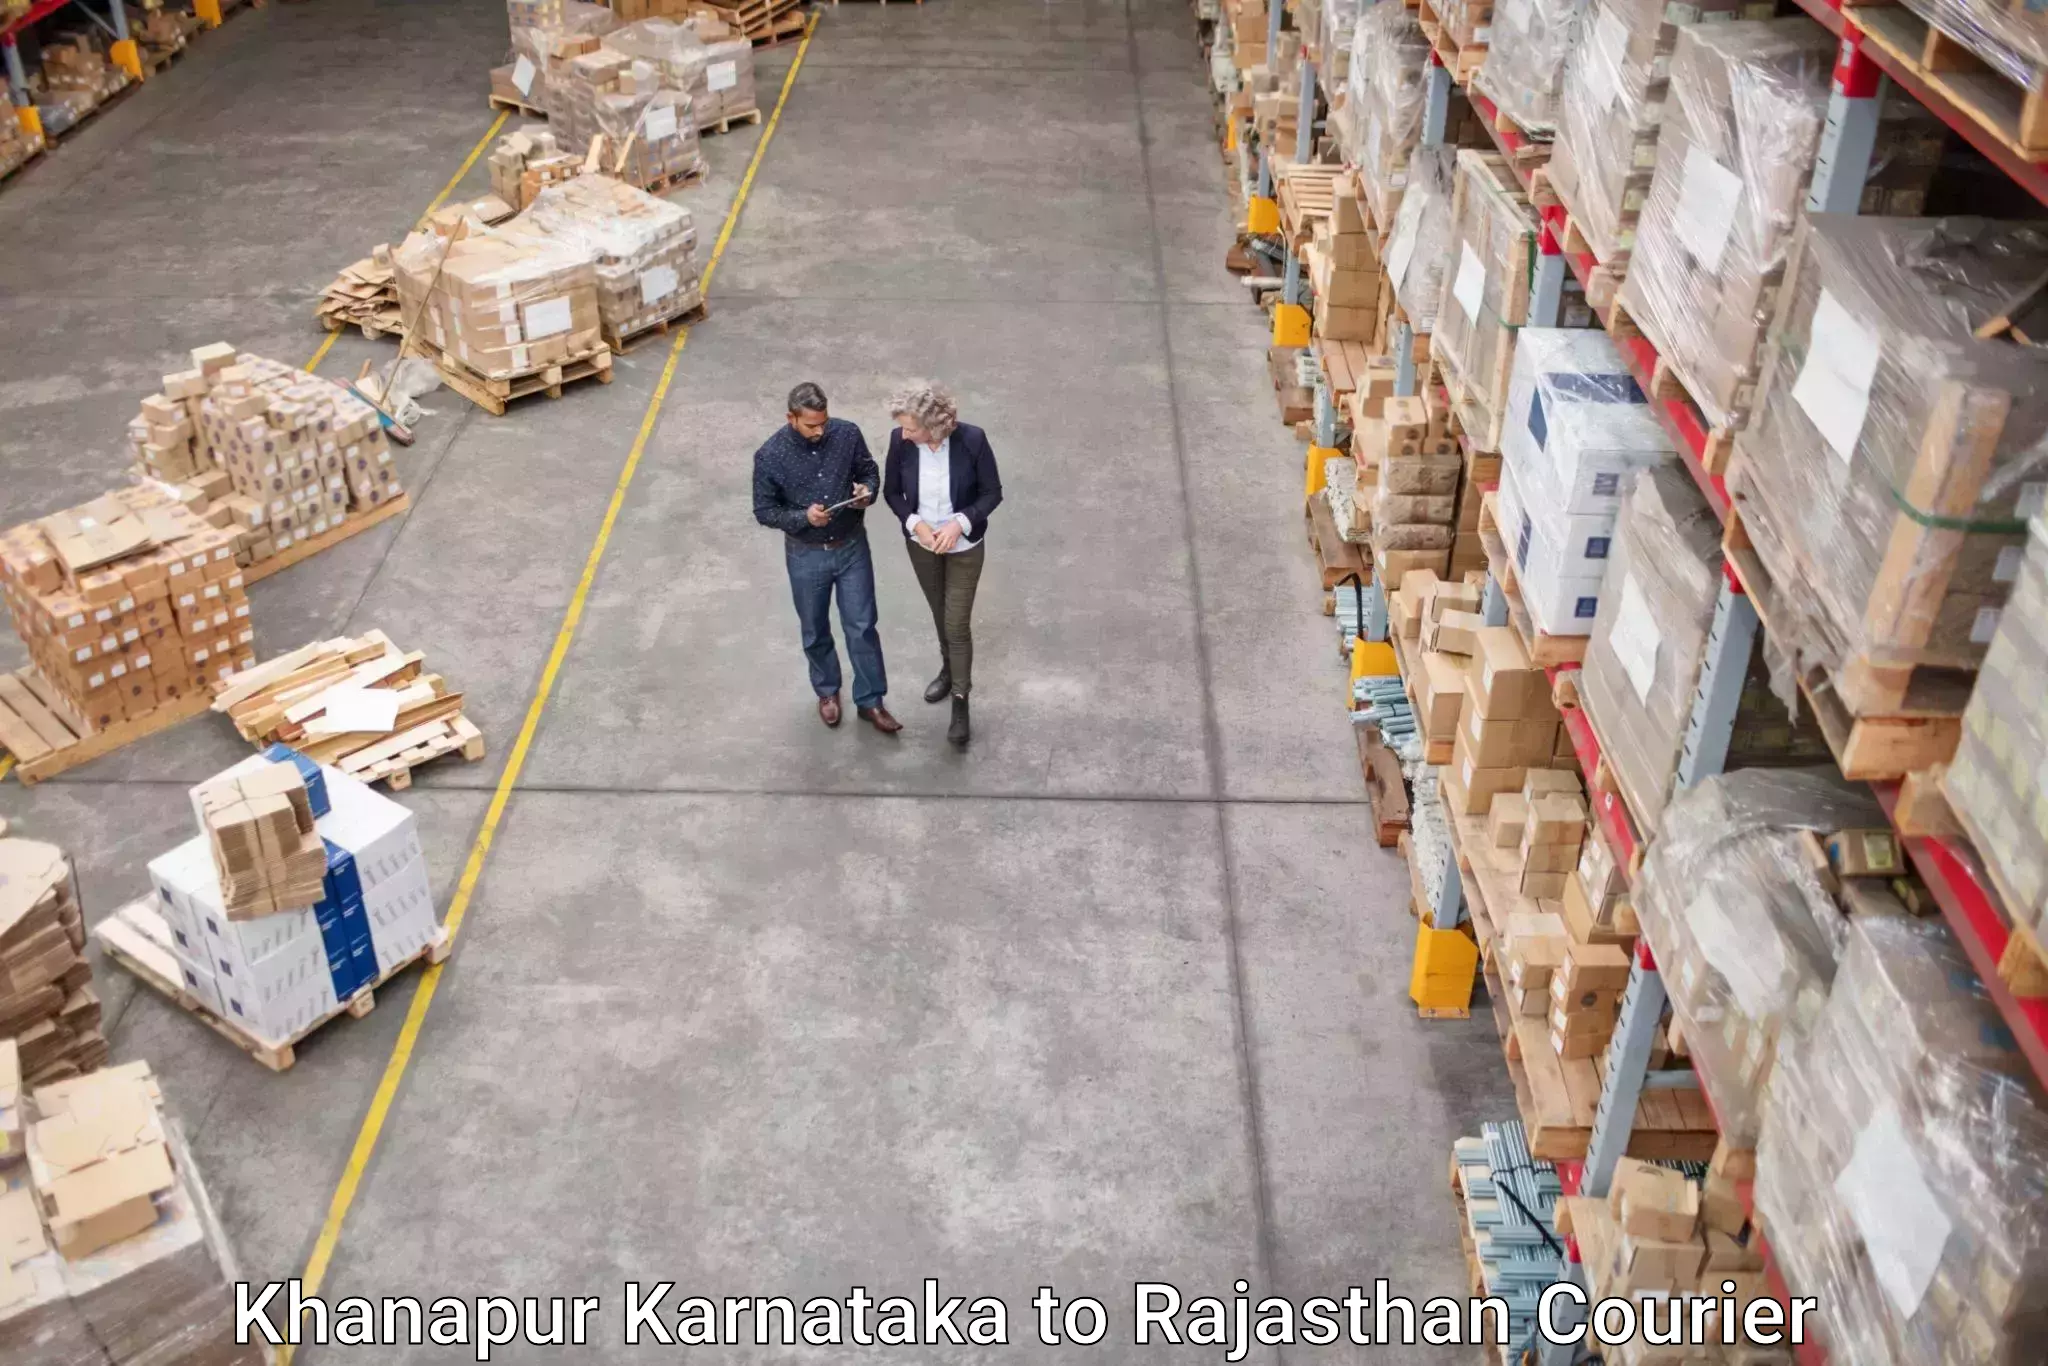 Courier tracking online Khanapur Karnataka to Pokhran